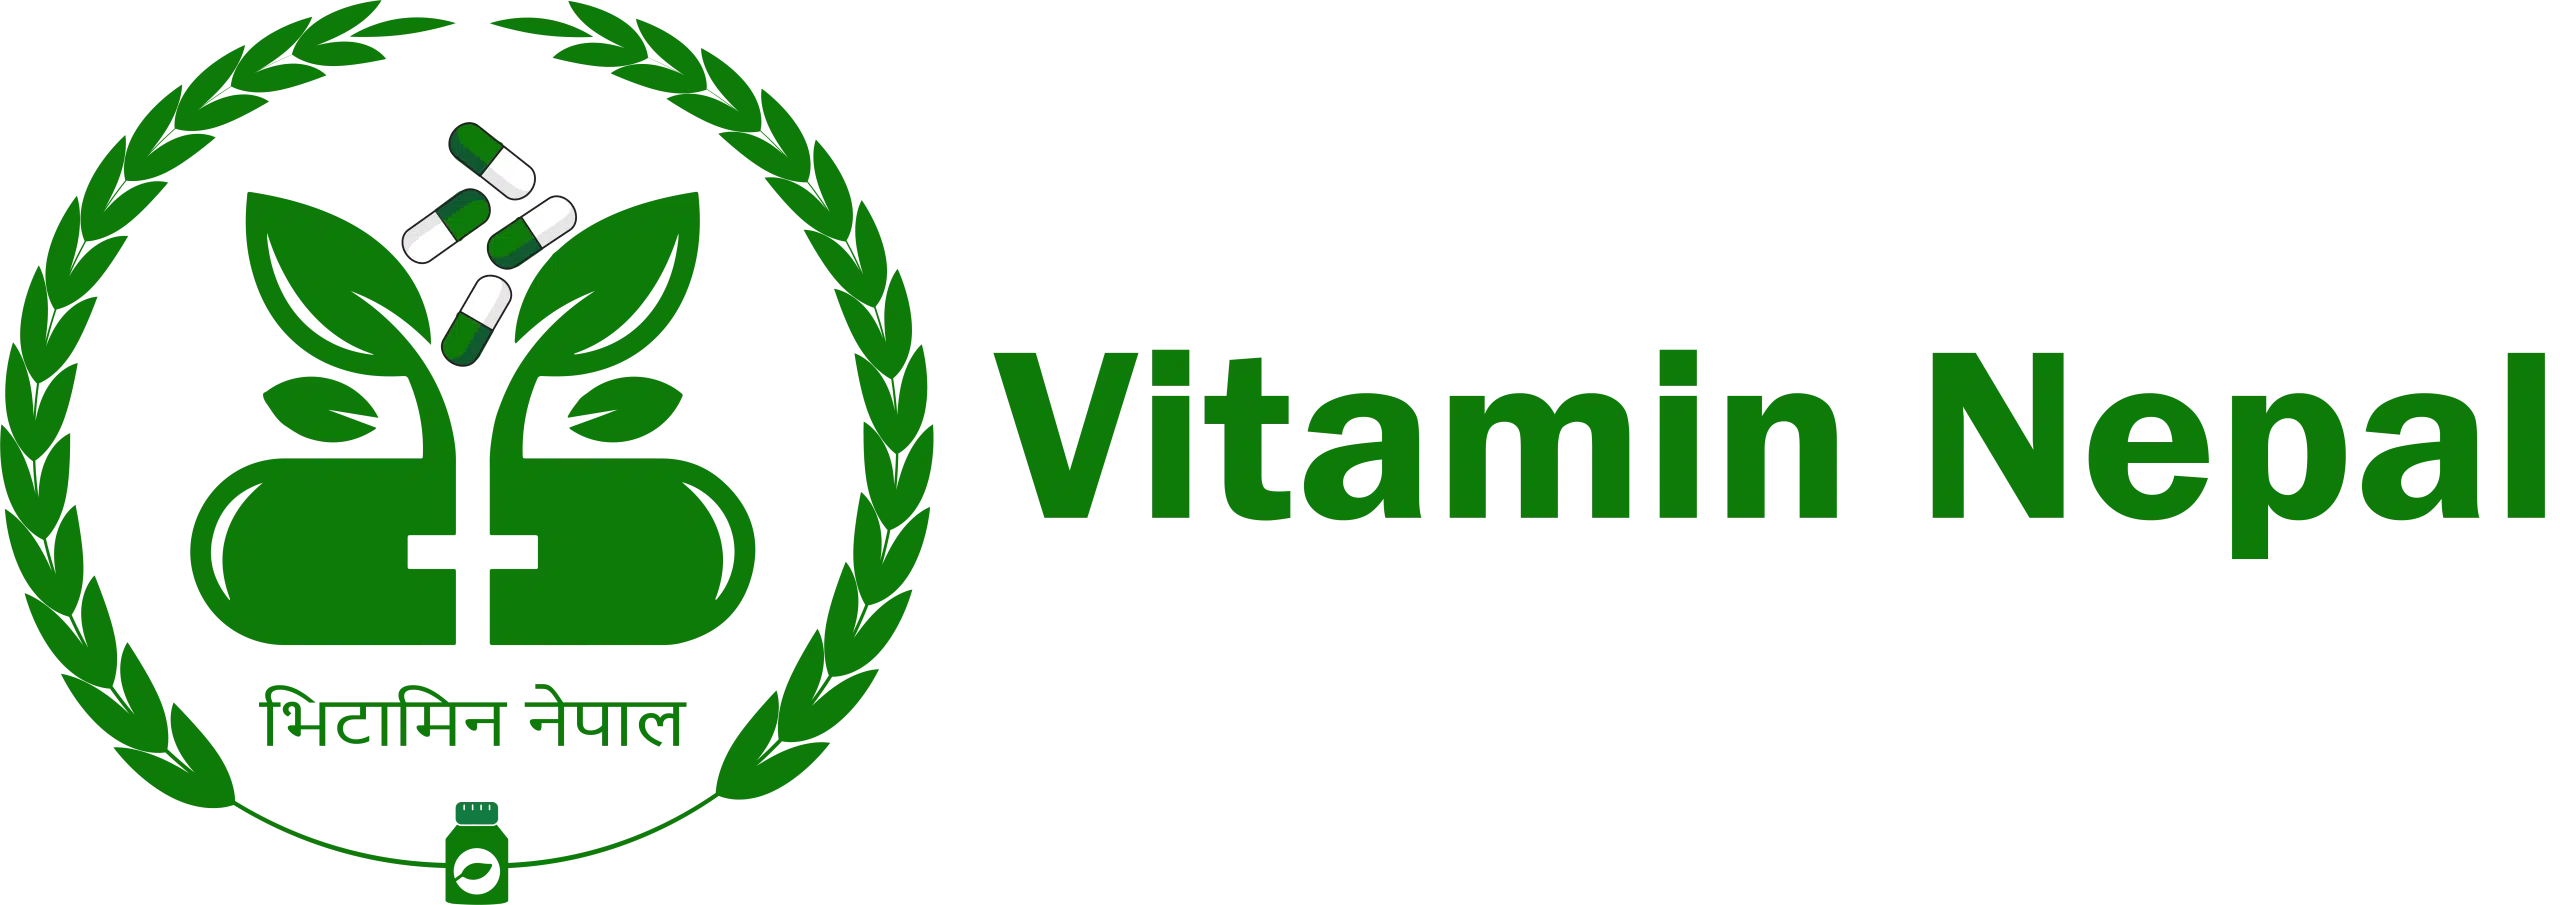 Vitamin Nepal Logo